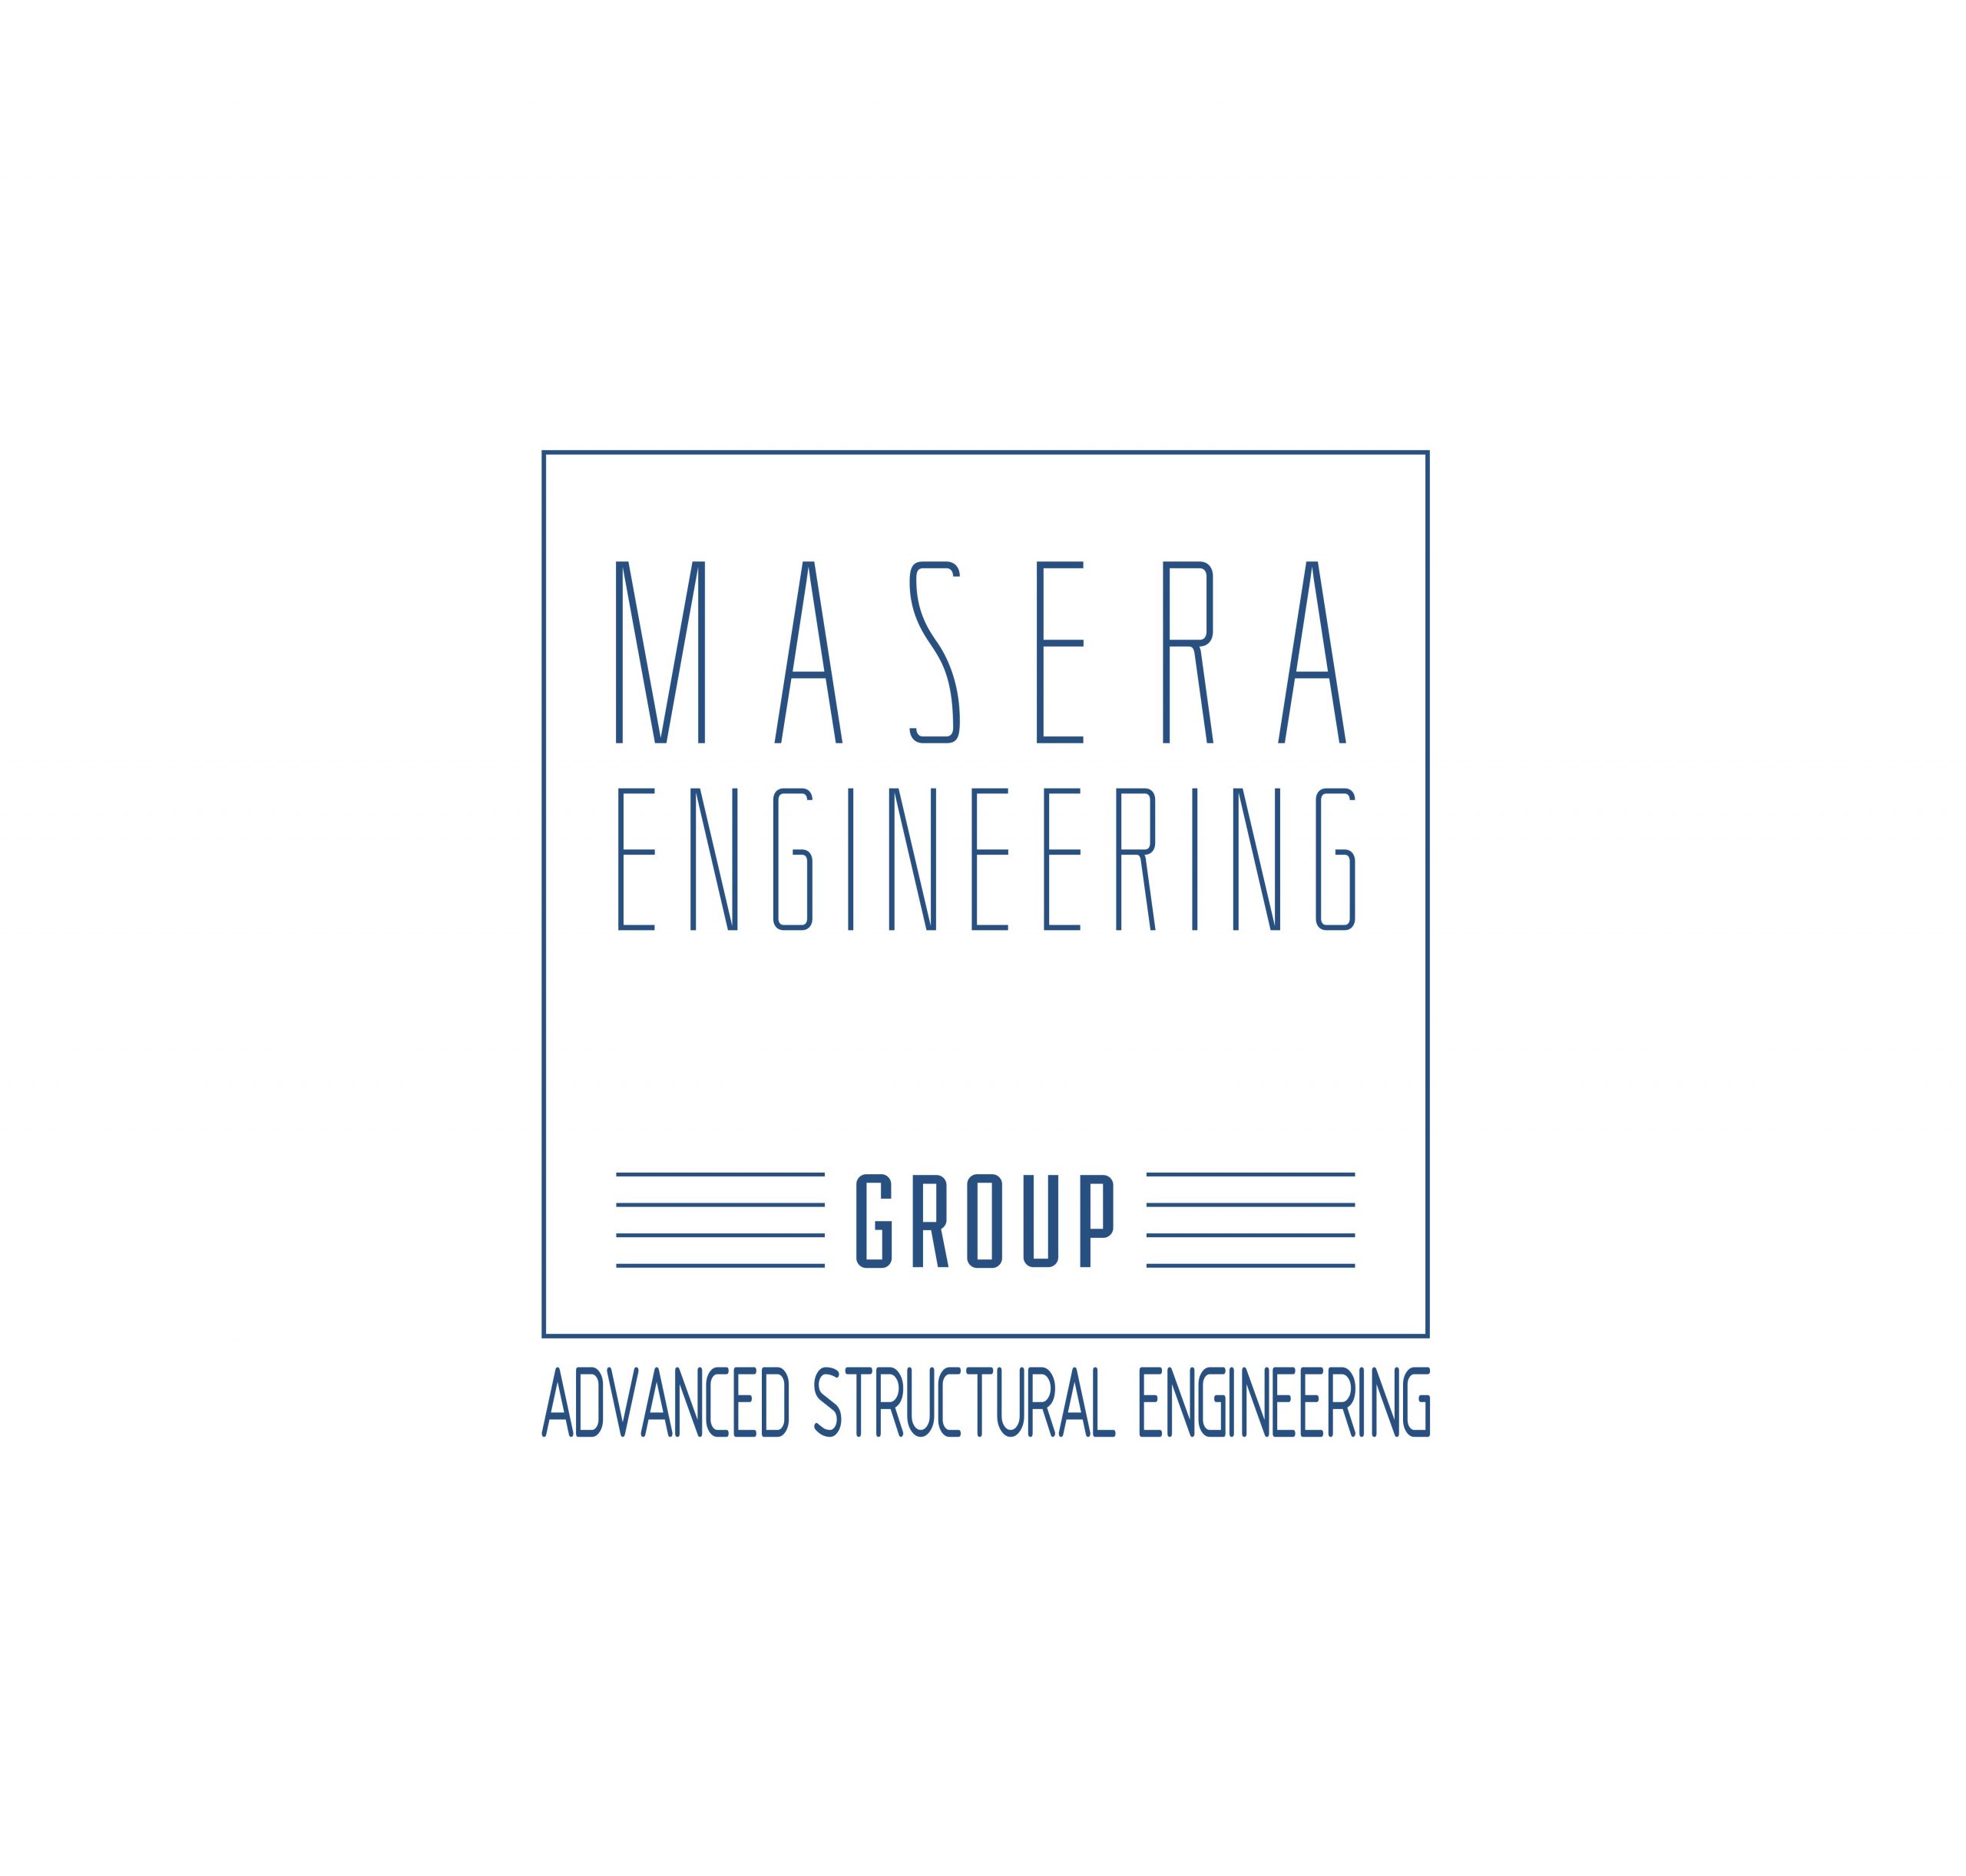 Masera Engineering Group